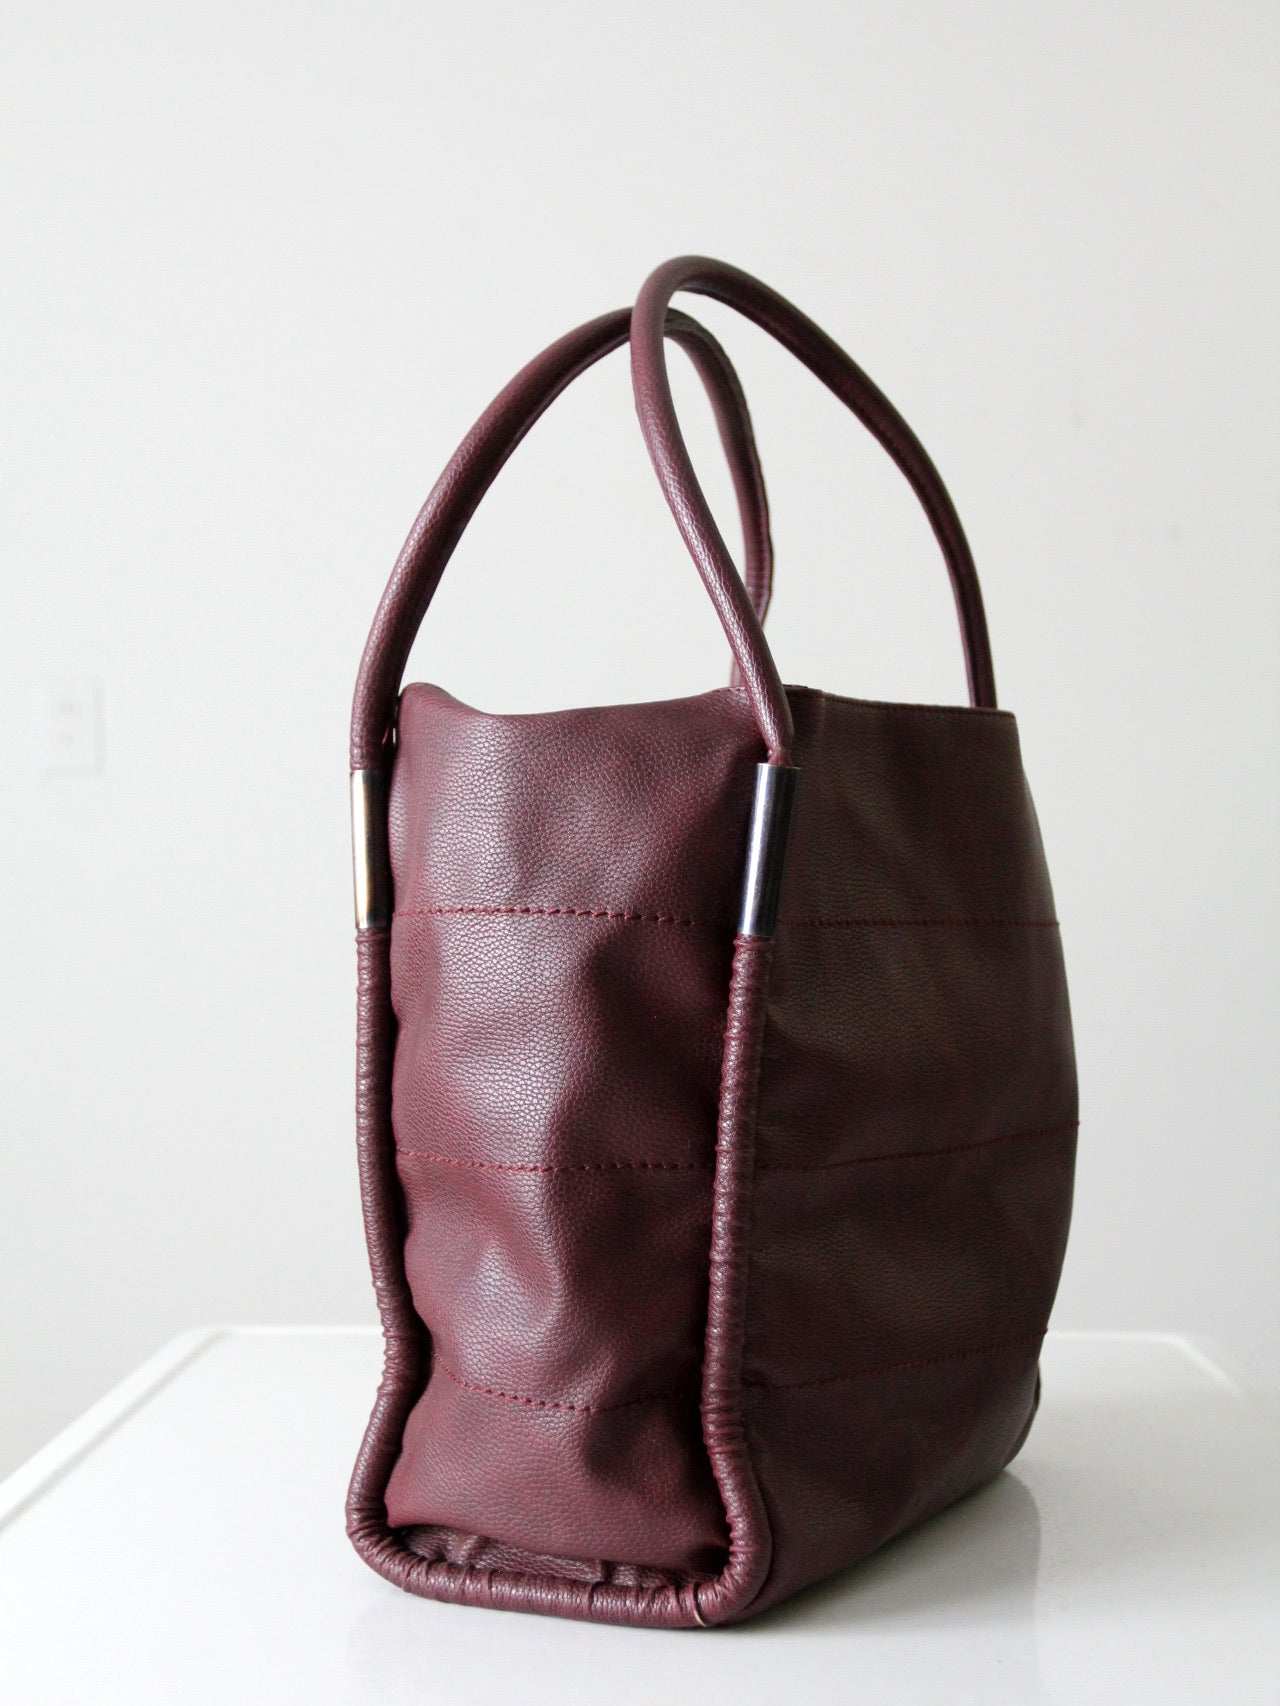 Handbags, Purses, & Bags - Shop All at Neiman Marcus | Bags, Purses, Prada  saffiano